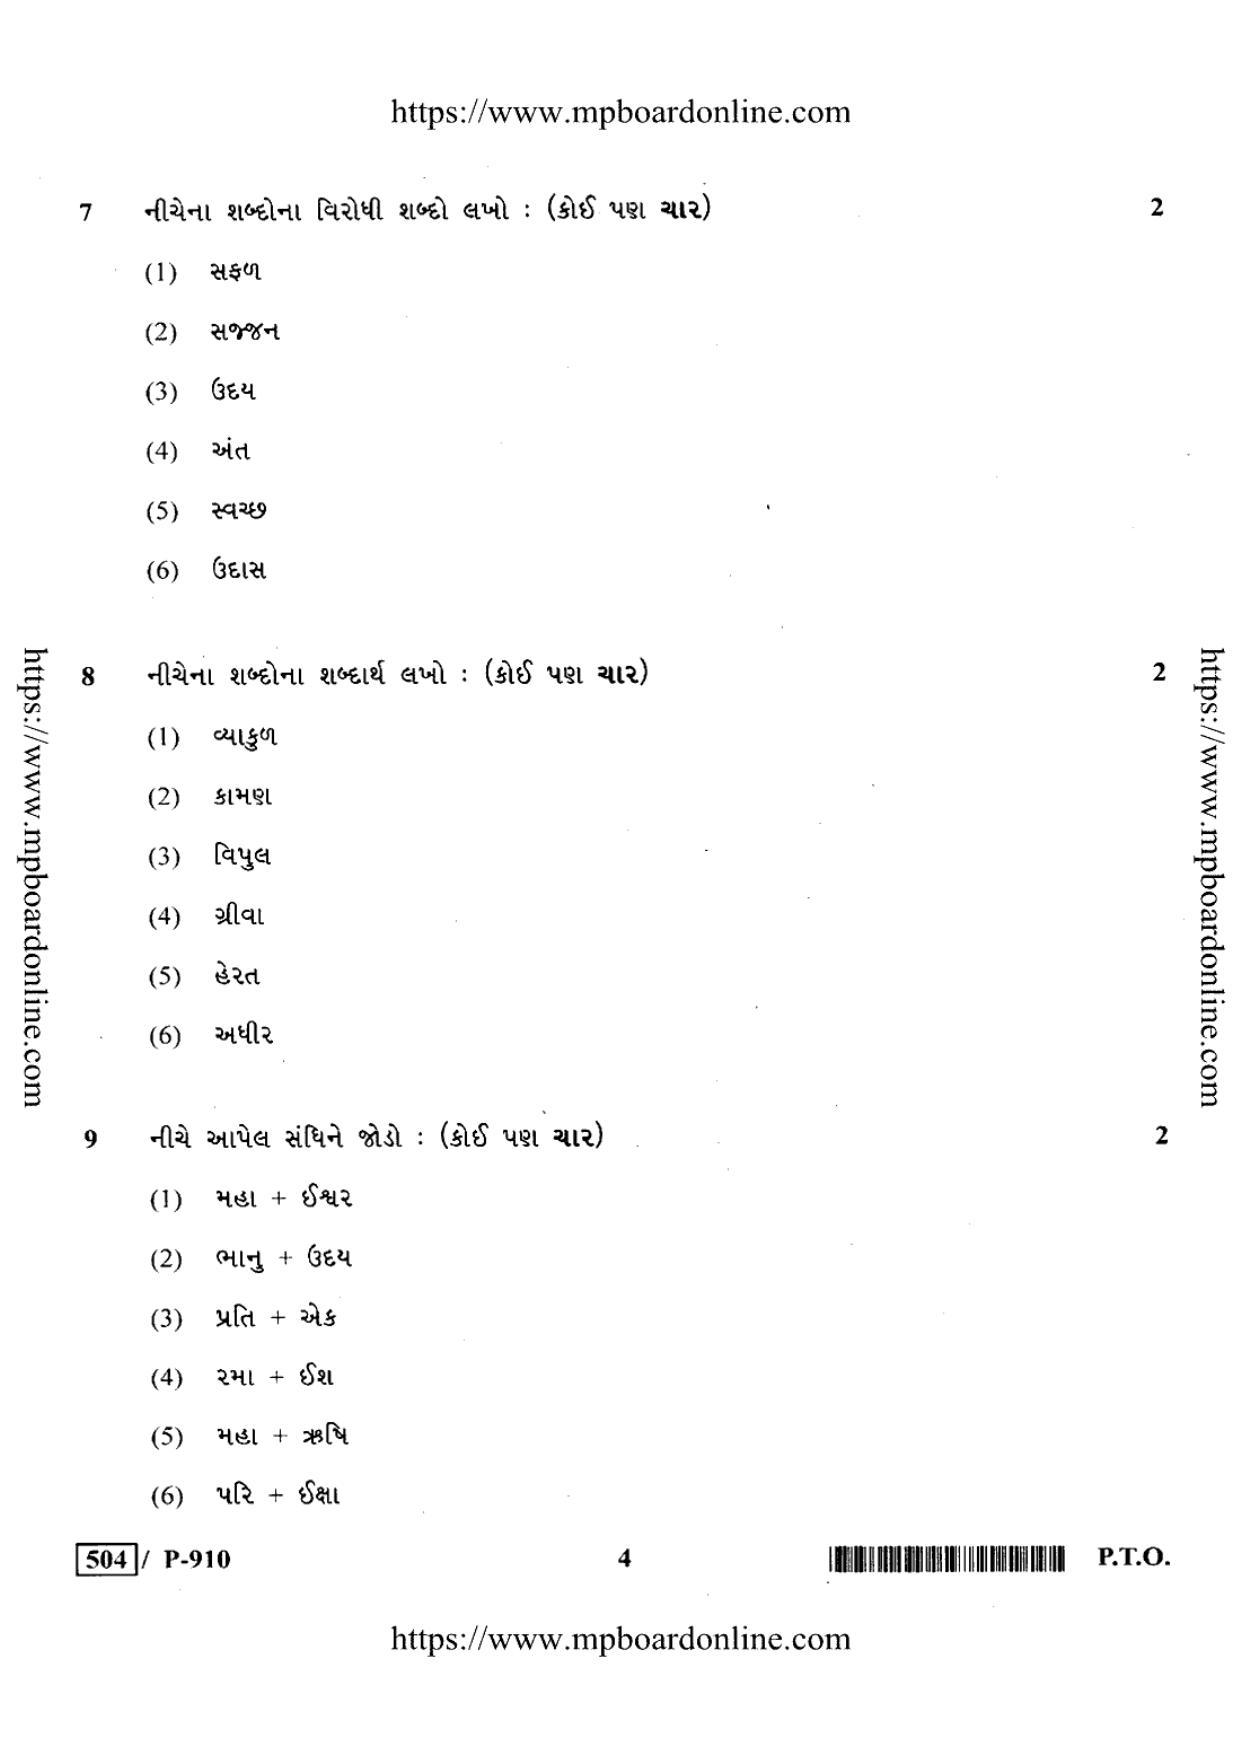 MP Board Class 10 Gujrat General 2020 Question Paper - Page 4